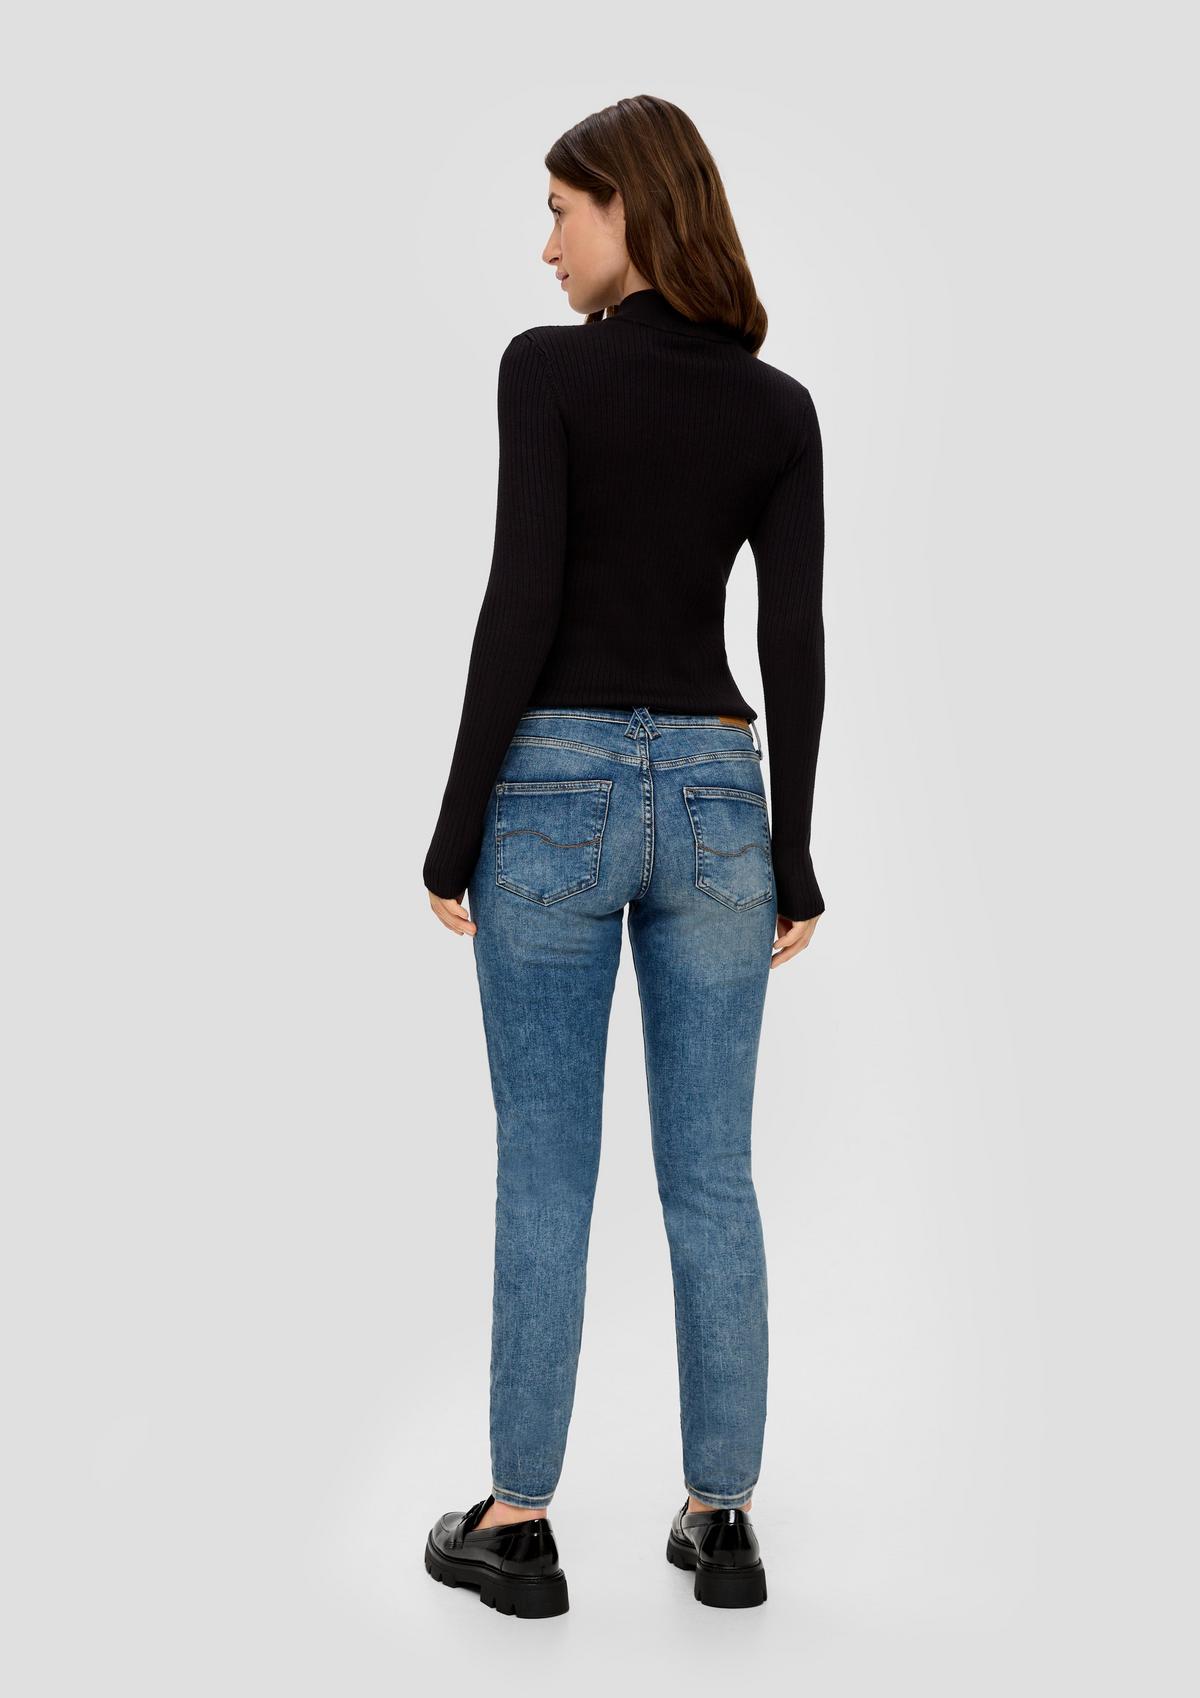 s.Oliver Sadie jeans / slim fit / mid rise / skinny leg / stretch cotton